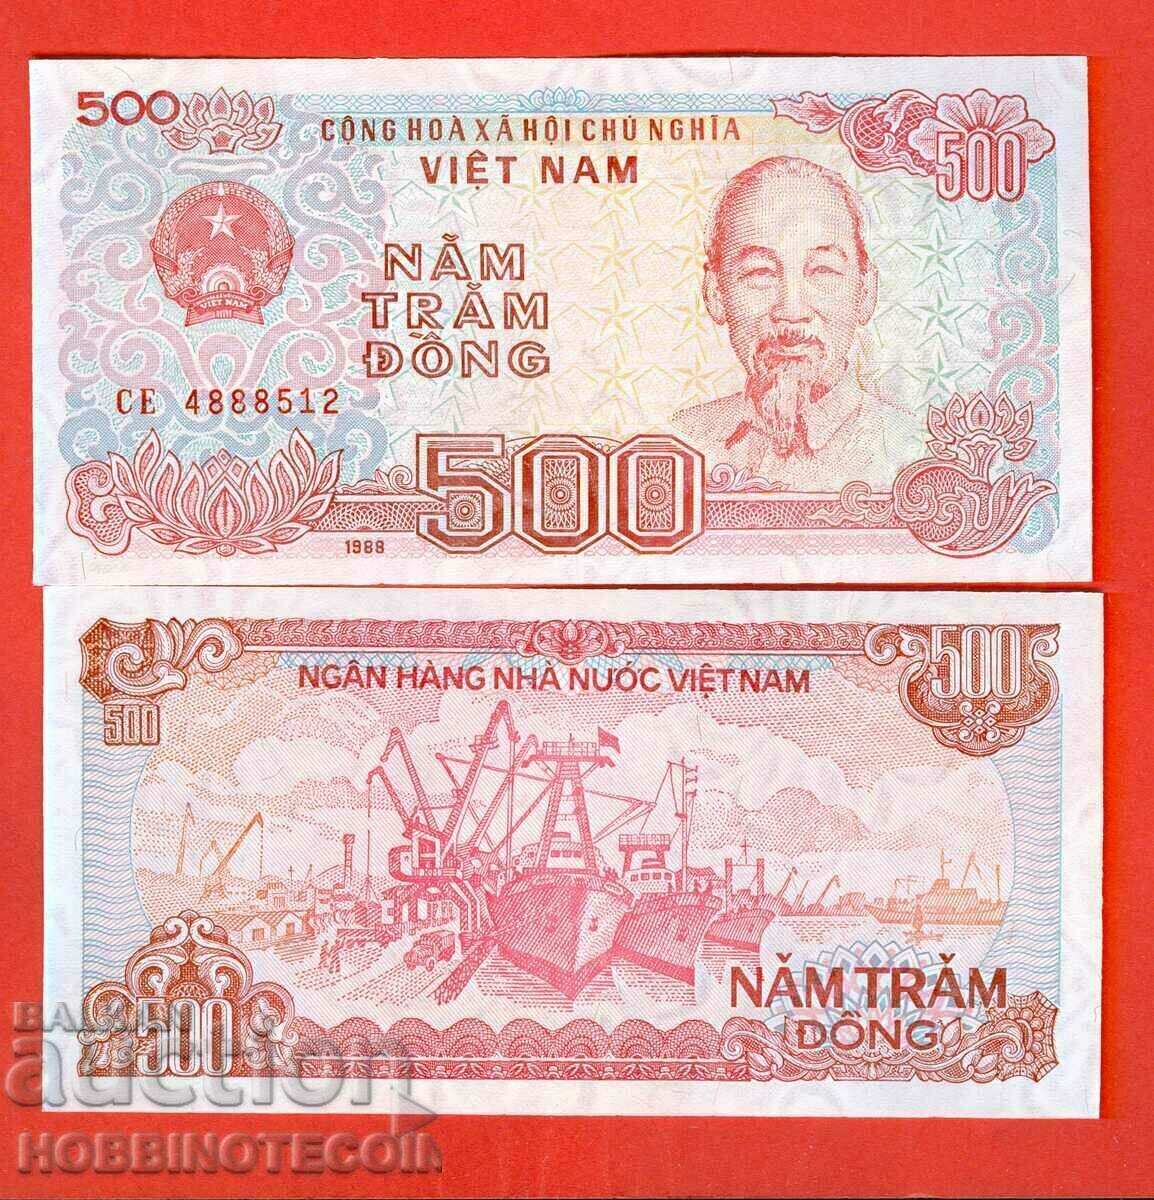 VIETNAM VIET NAM 500 Dong έκδοση - έκδοση 1988 ΝΕΟ UNC